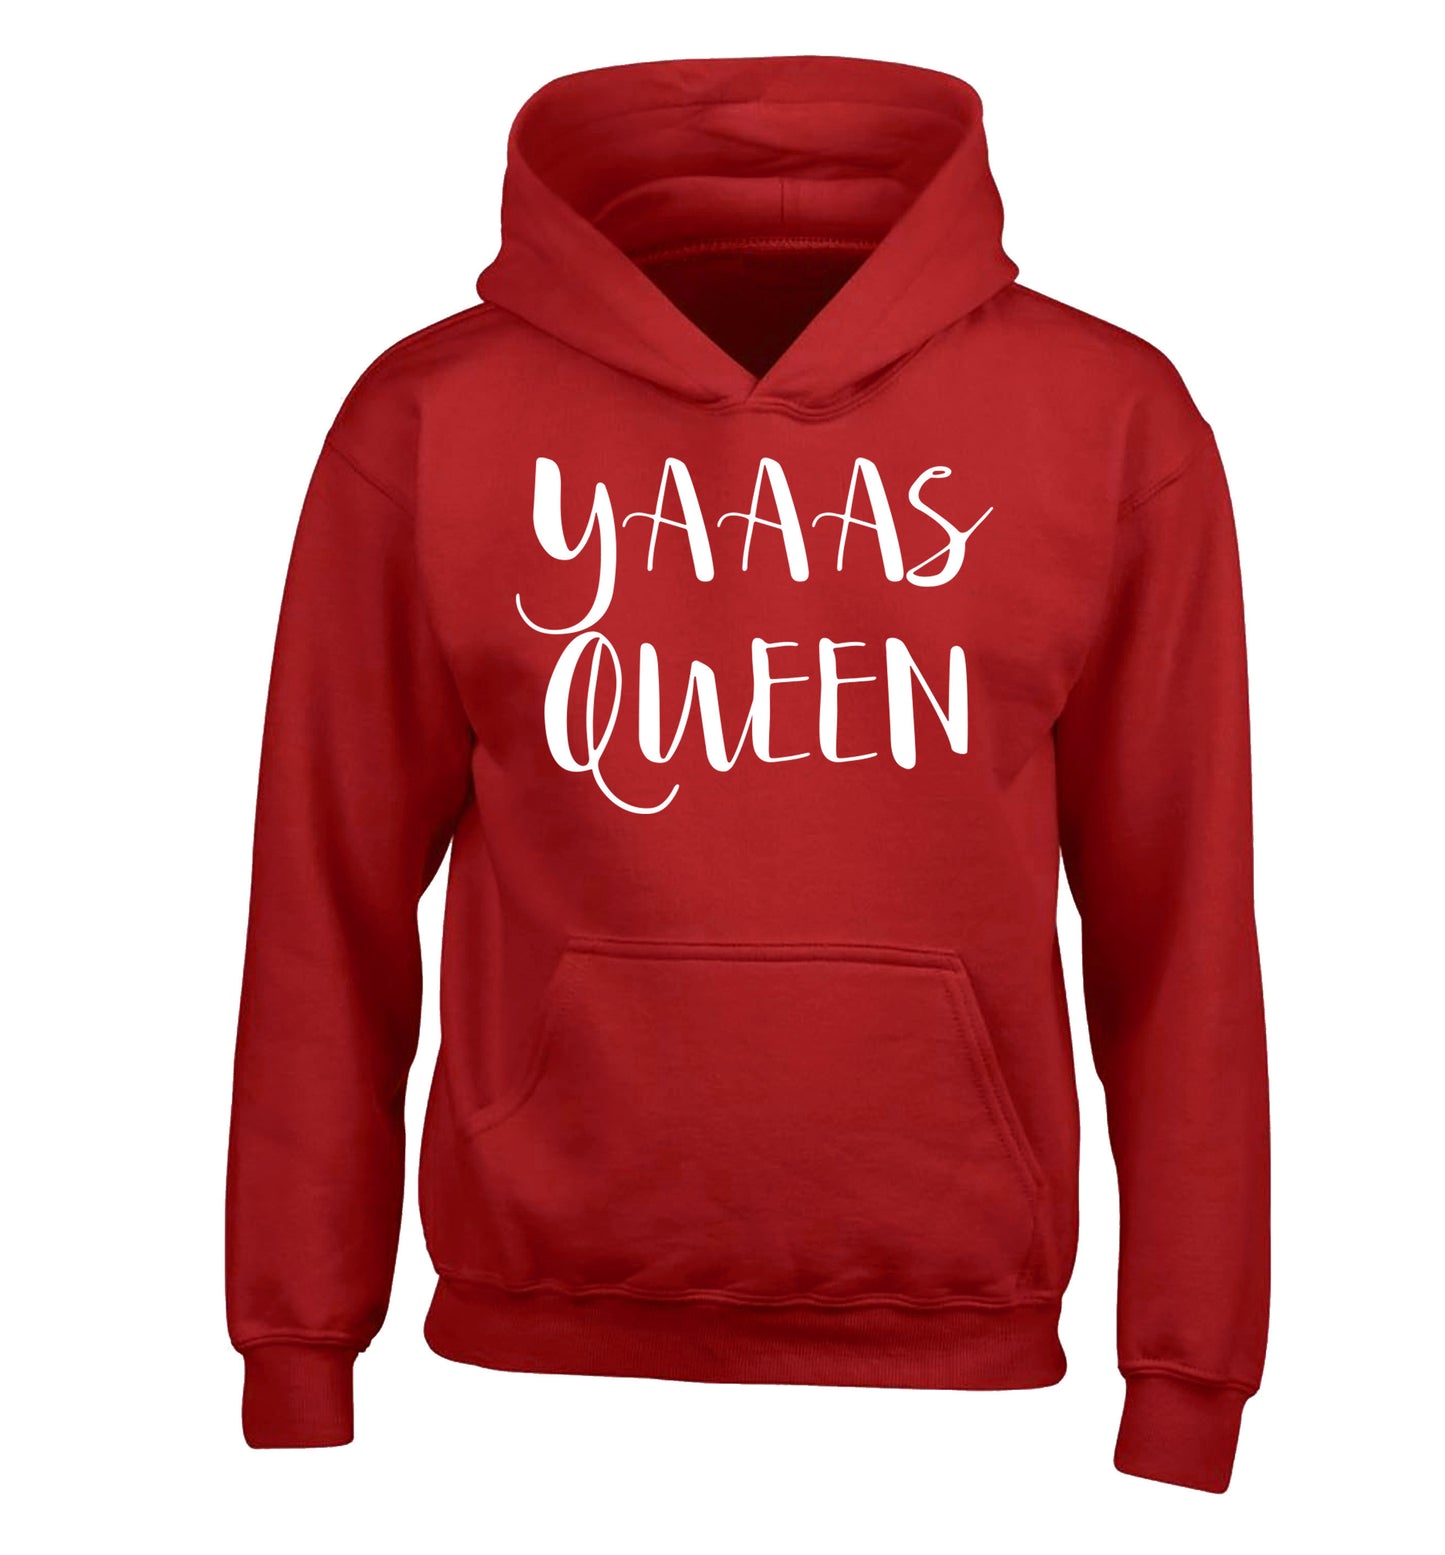 Yas Queen children's red hoodie 12-14 Years